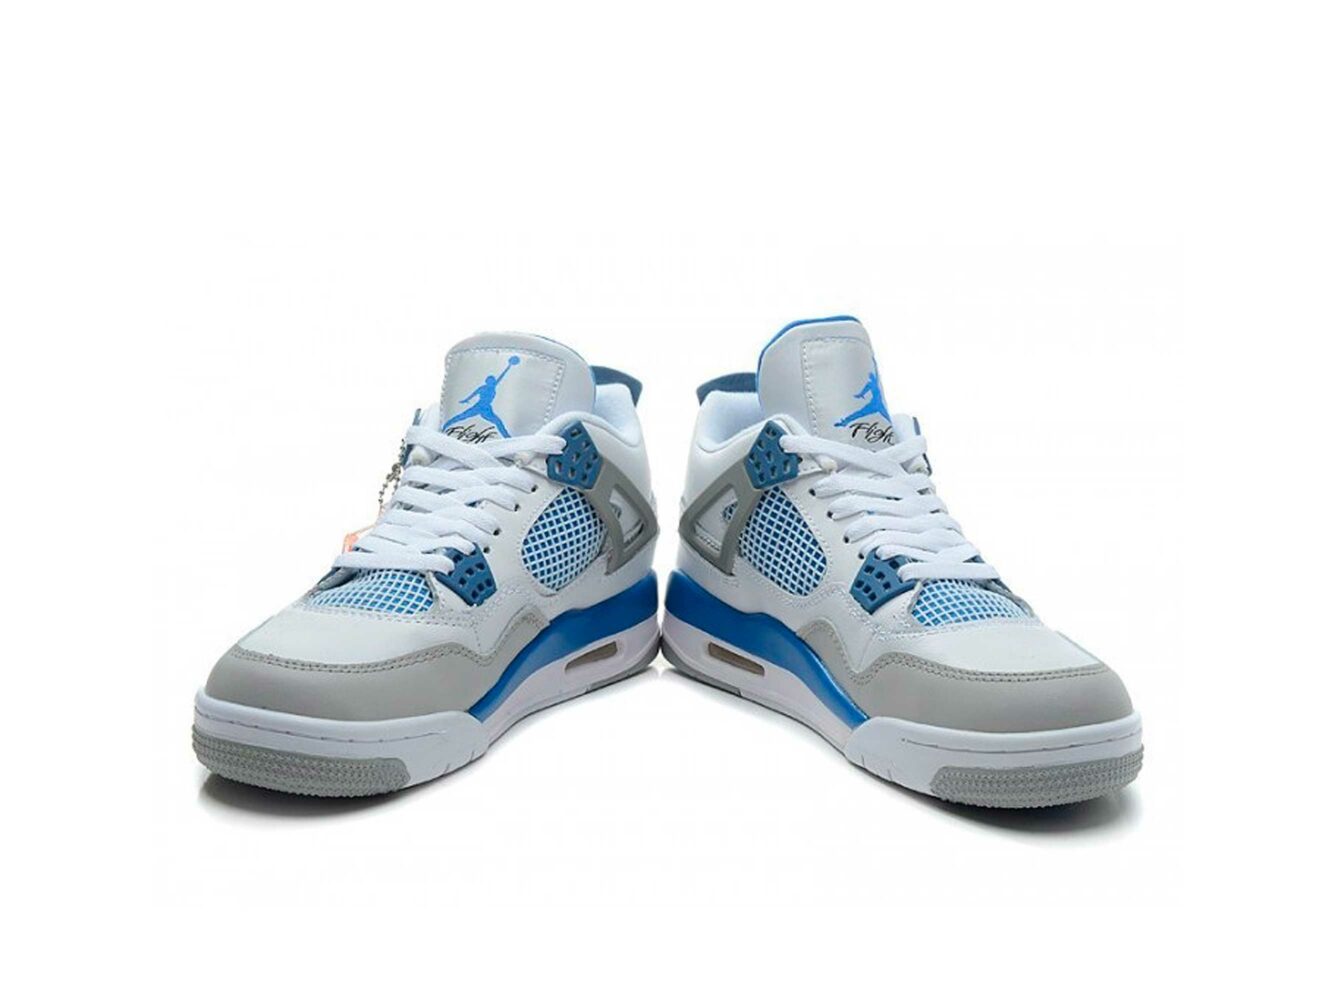 nike air jordan 4 retro white military blue grey 308497-105 интернет магазин